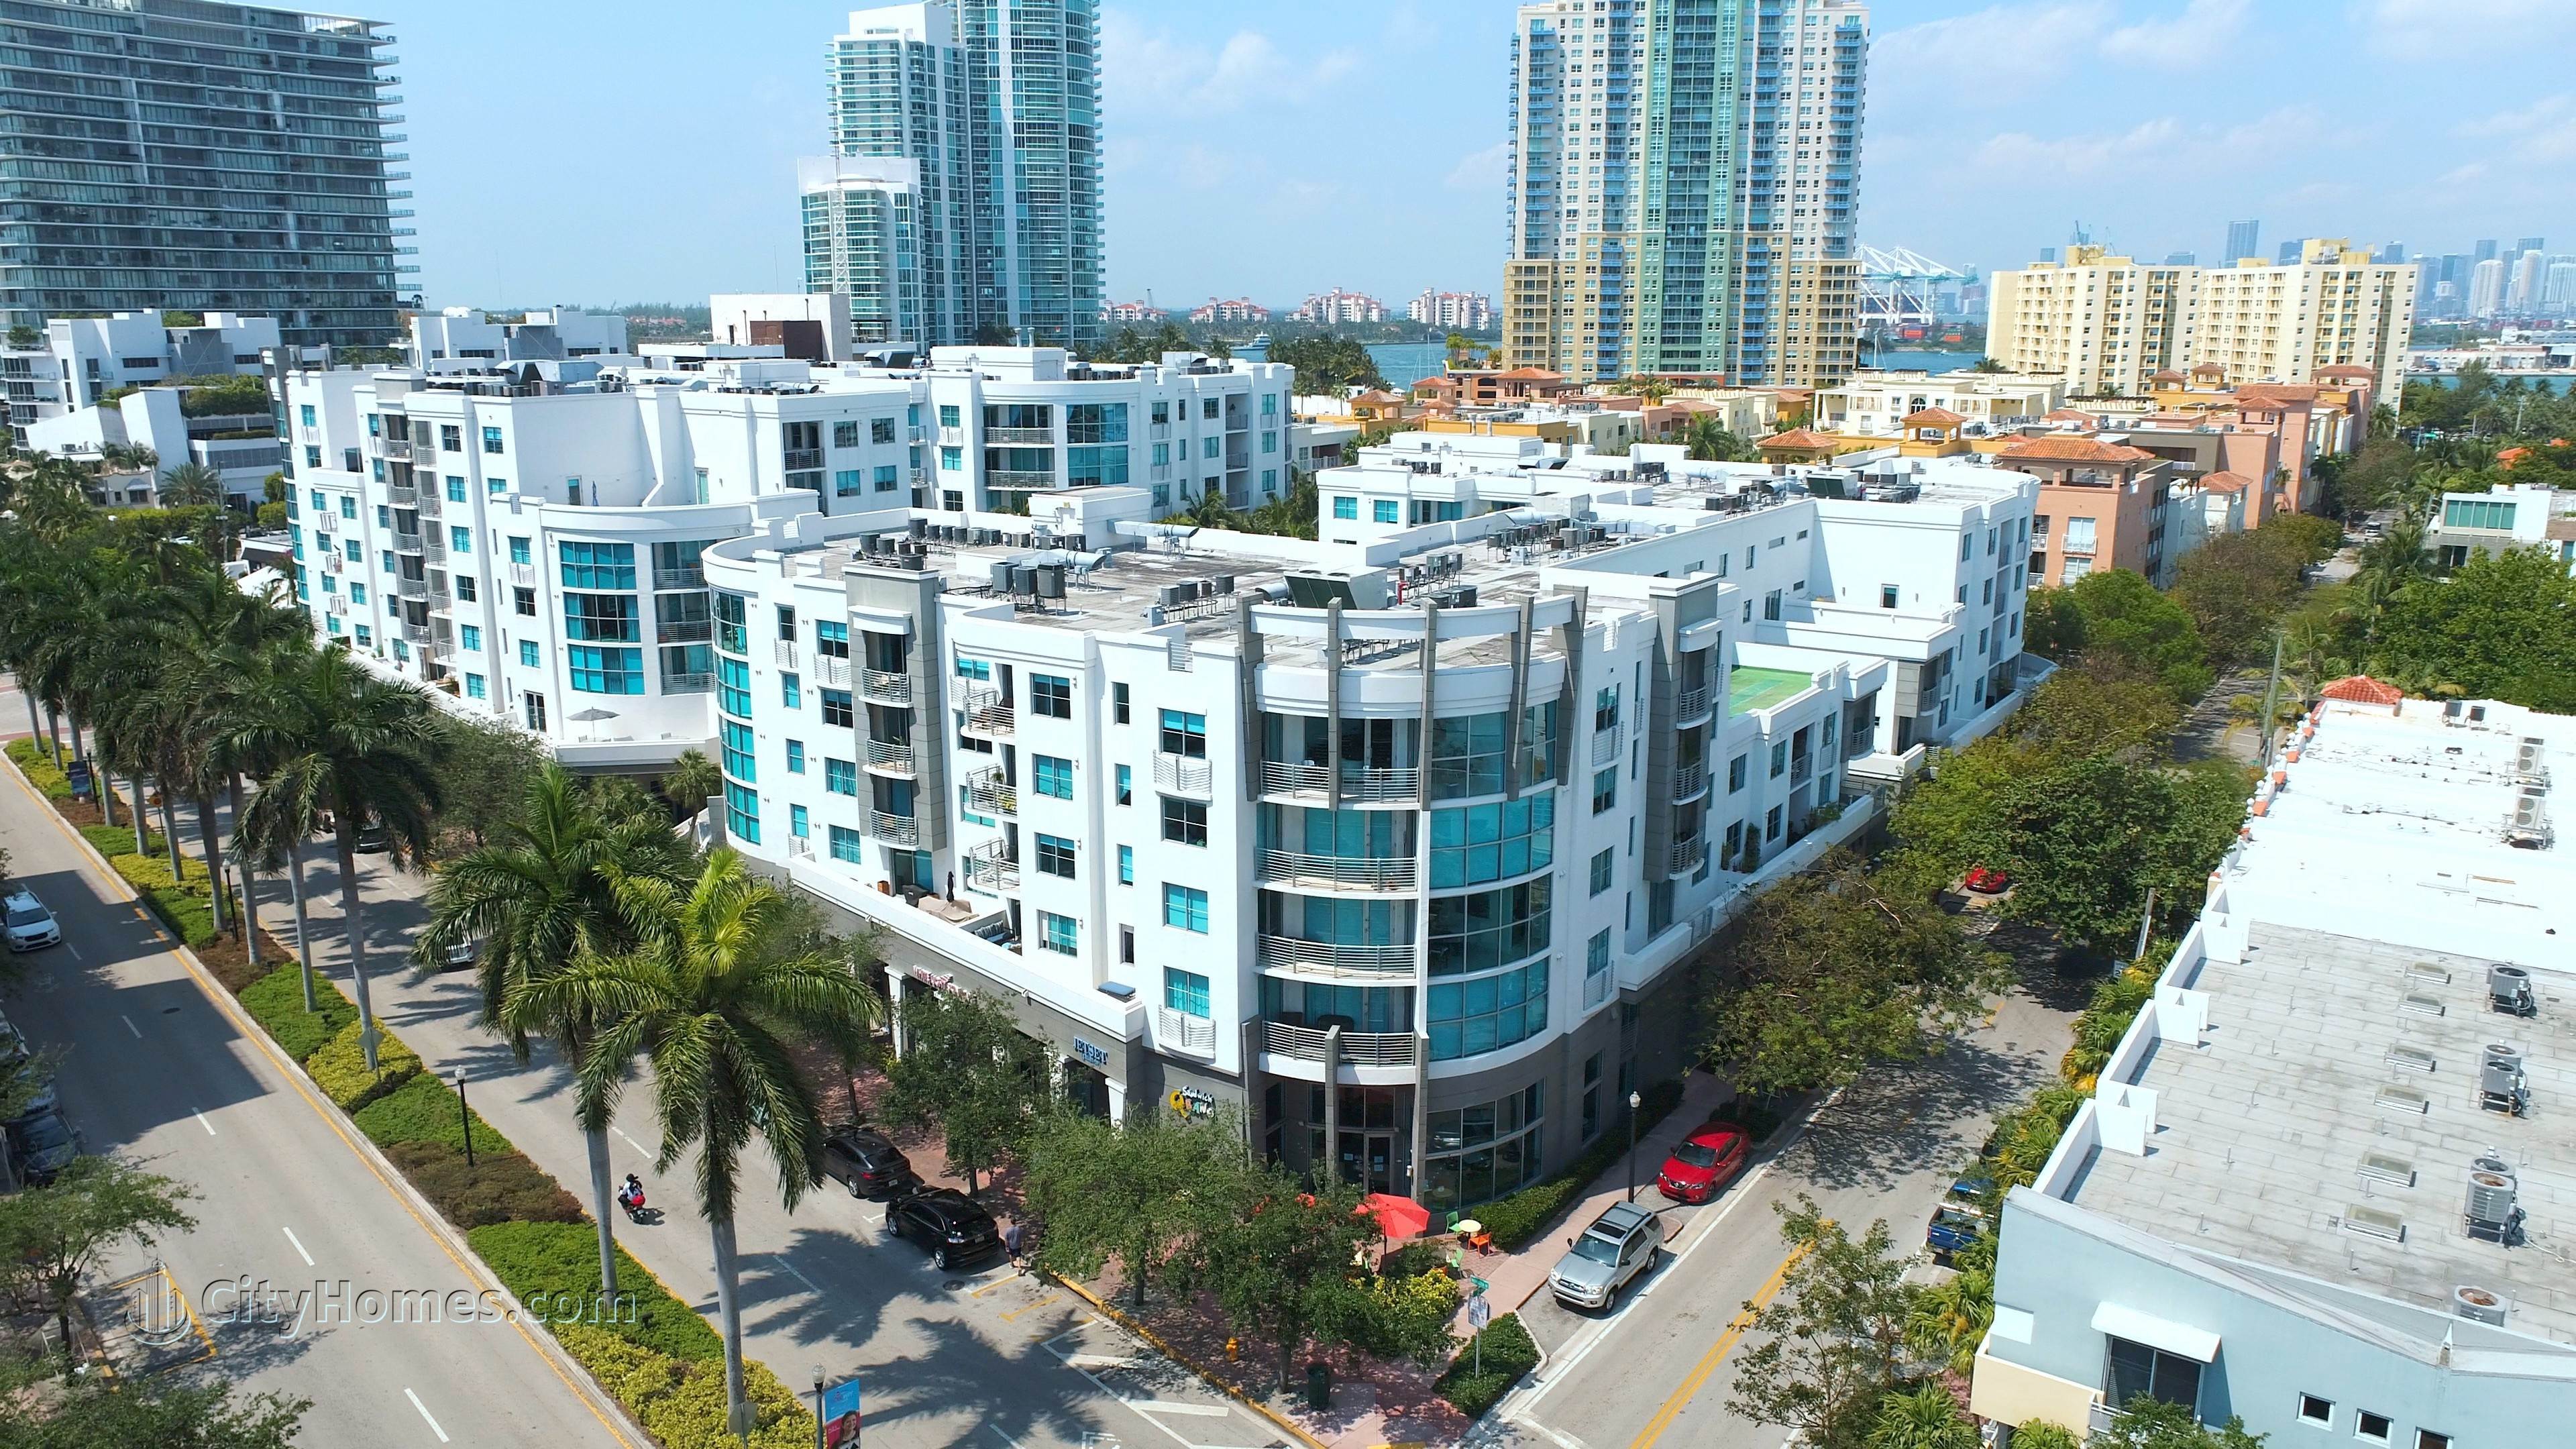 COSMOPOLITAN TOWERS gebouw op 110 Washington Ave, South of Fifth, Miami Beach, FL 33139